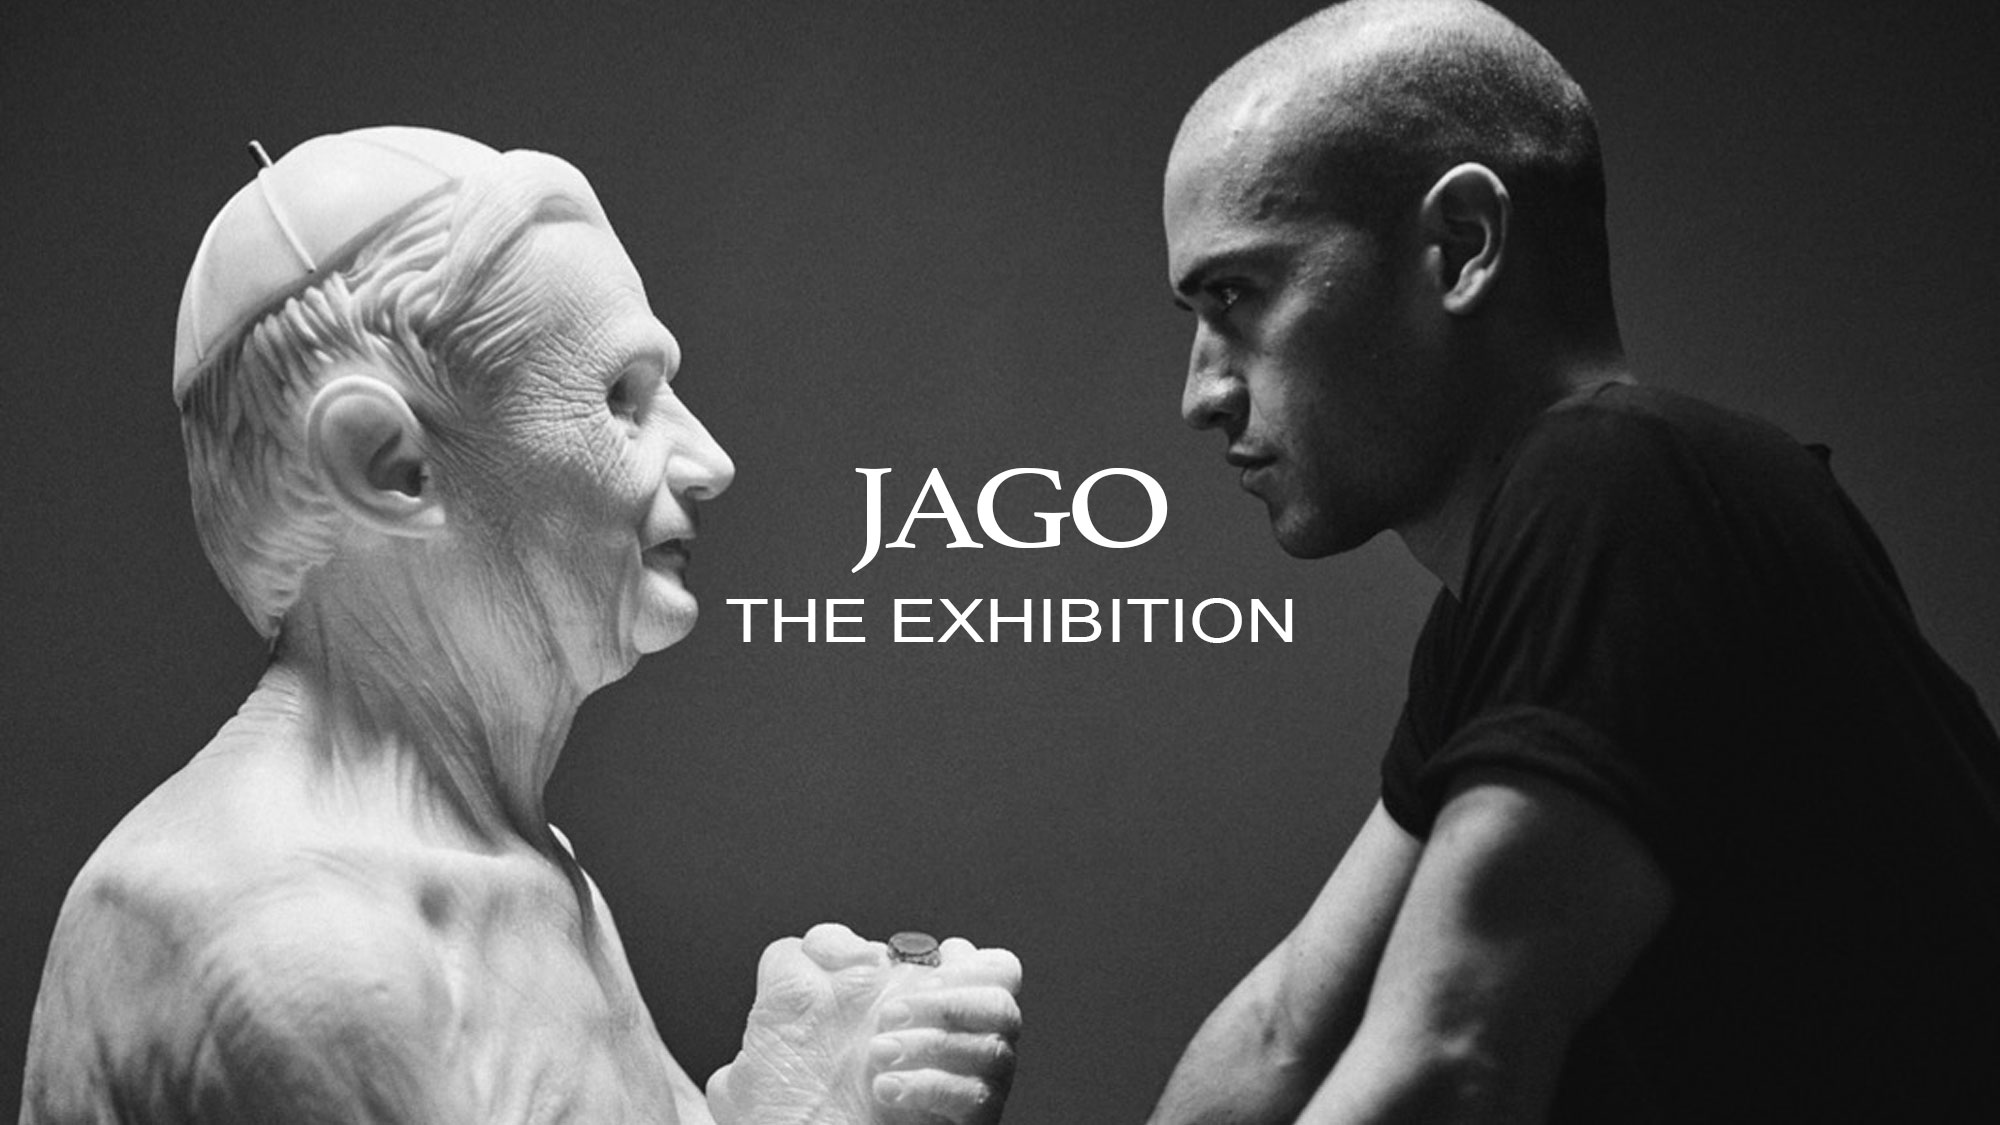 JAGO. The Exhibition